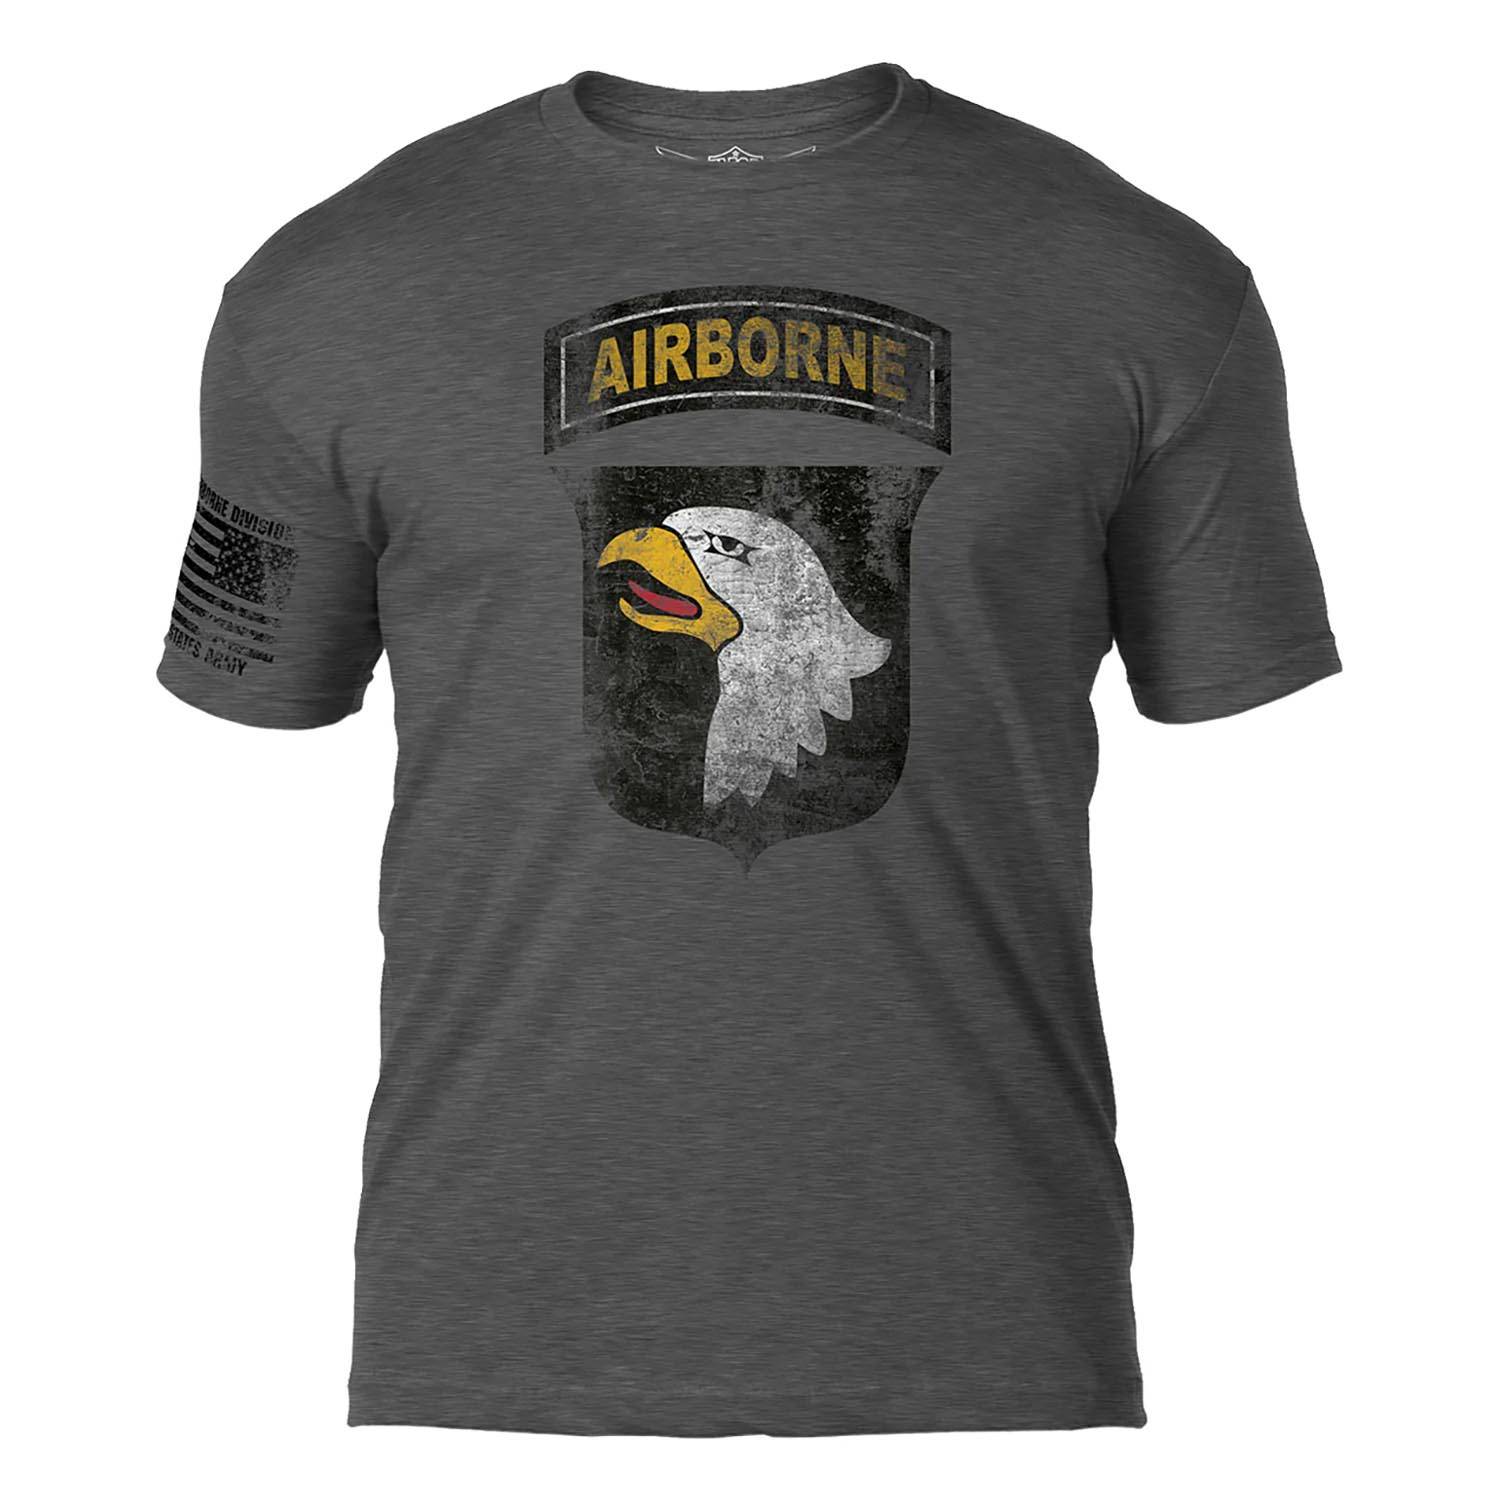 7.62 Design Screaming Eagles 101st Airborne Division T-Shirt